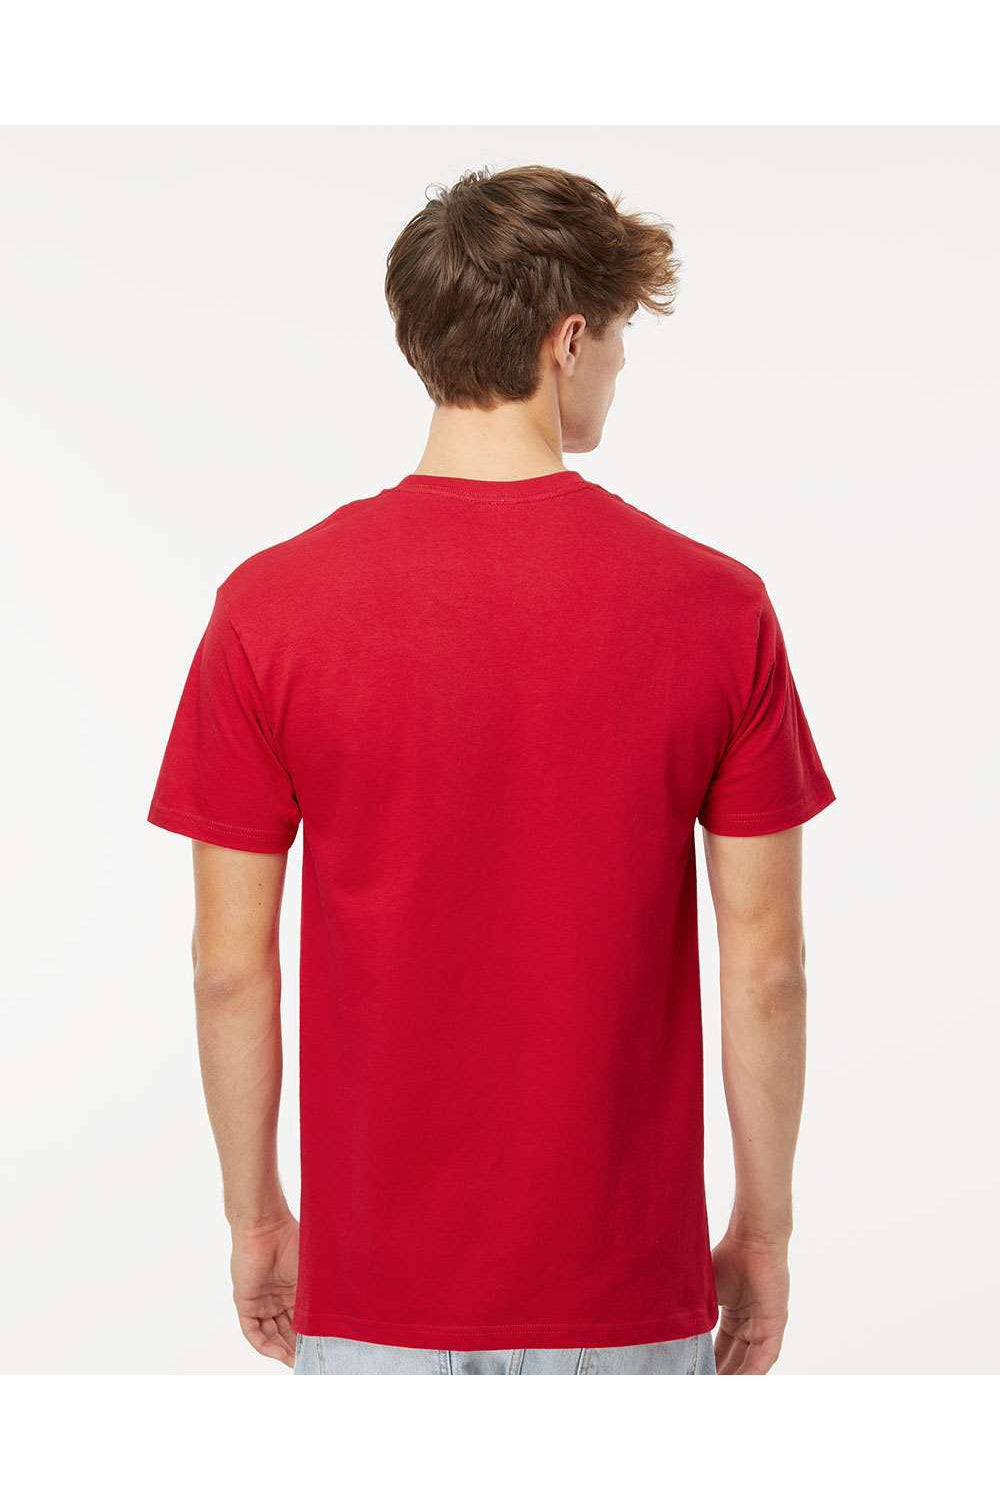 M&O 4800 Mens Gold Soft Touch Short Sleeve Crewneck T-Shirt Deep Red Model Back